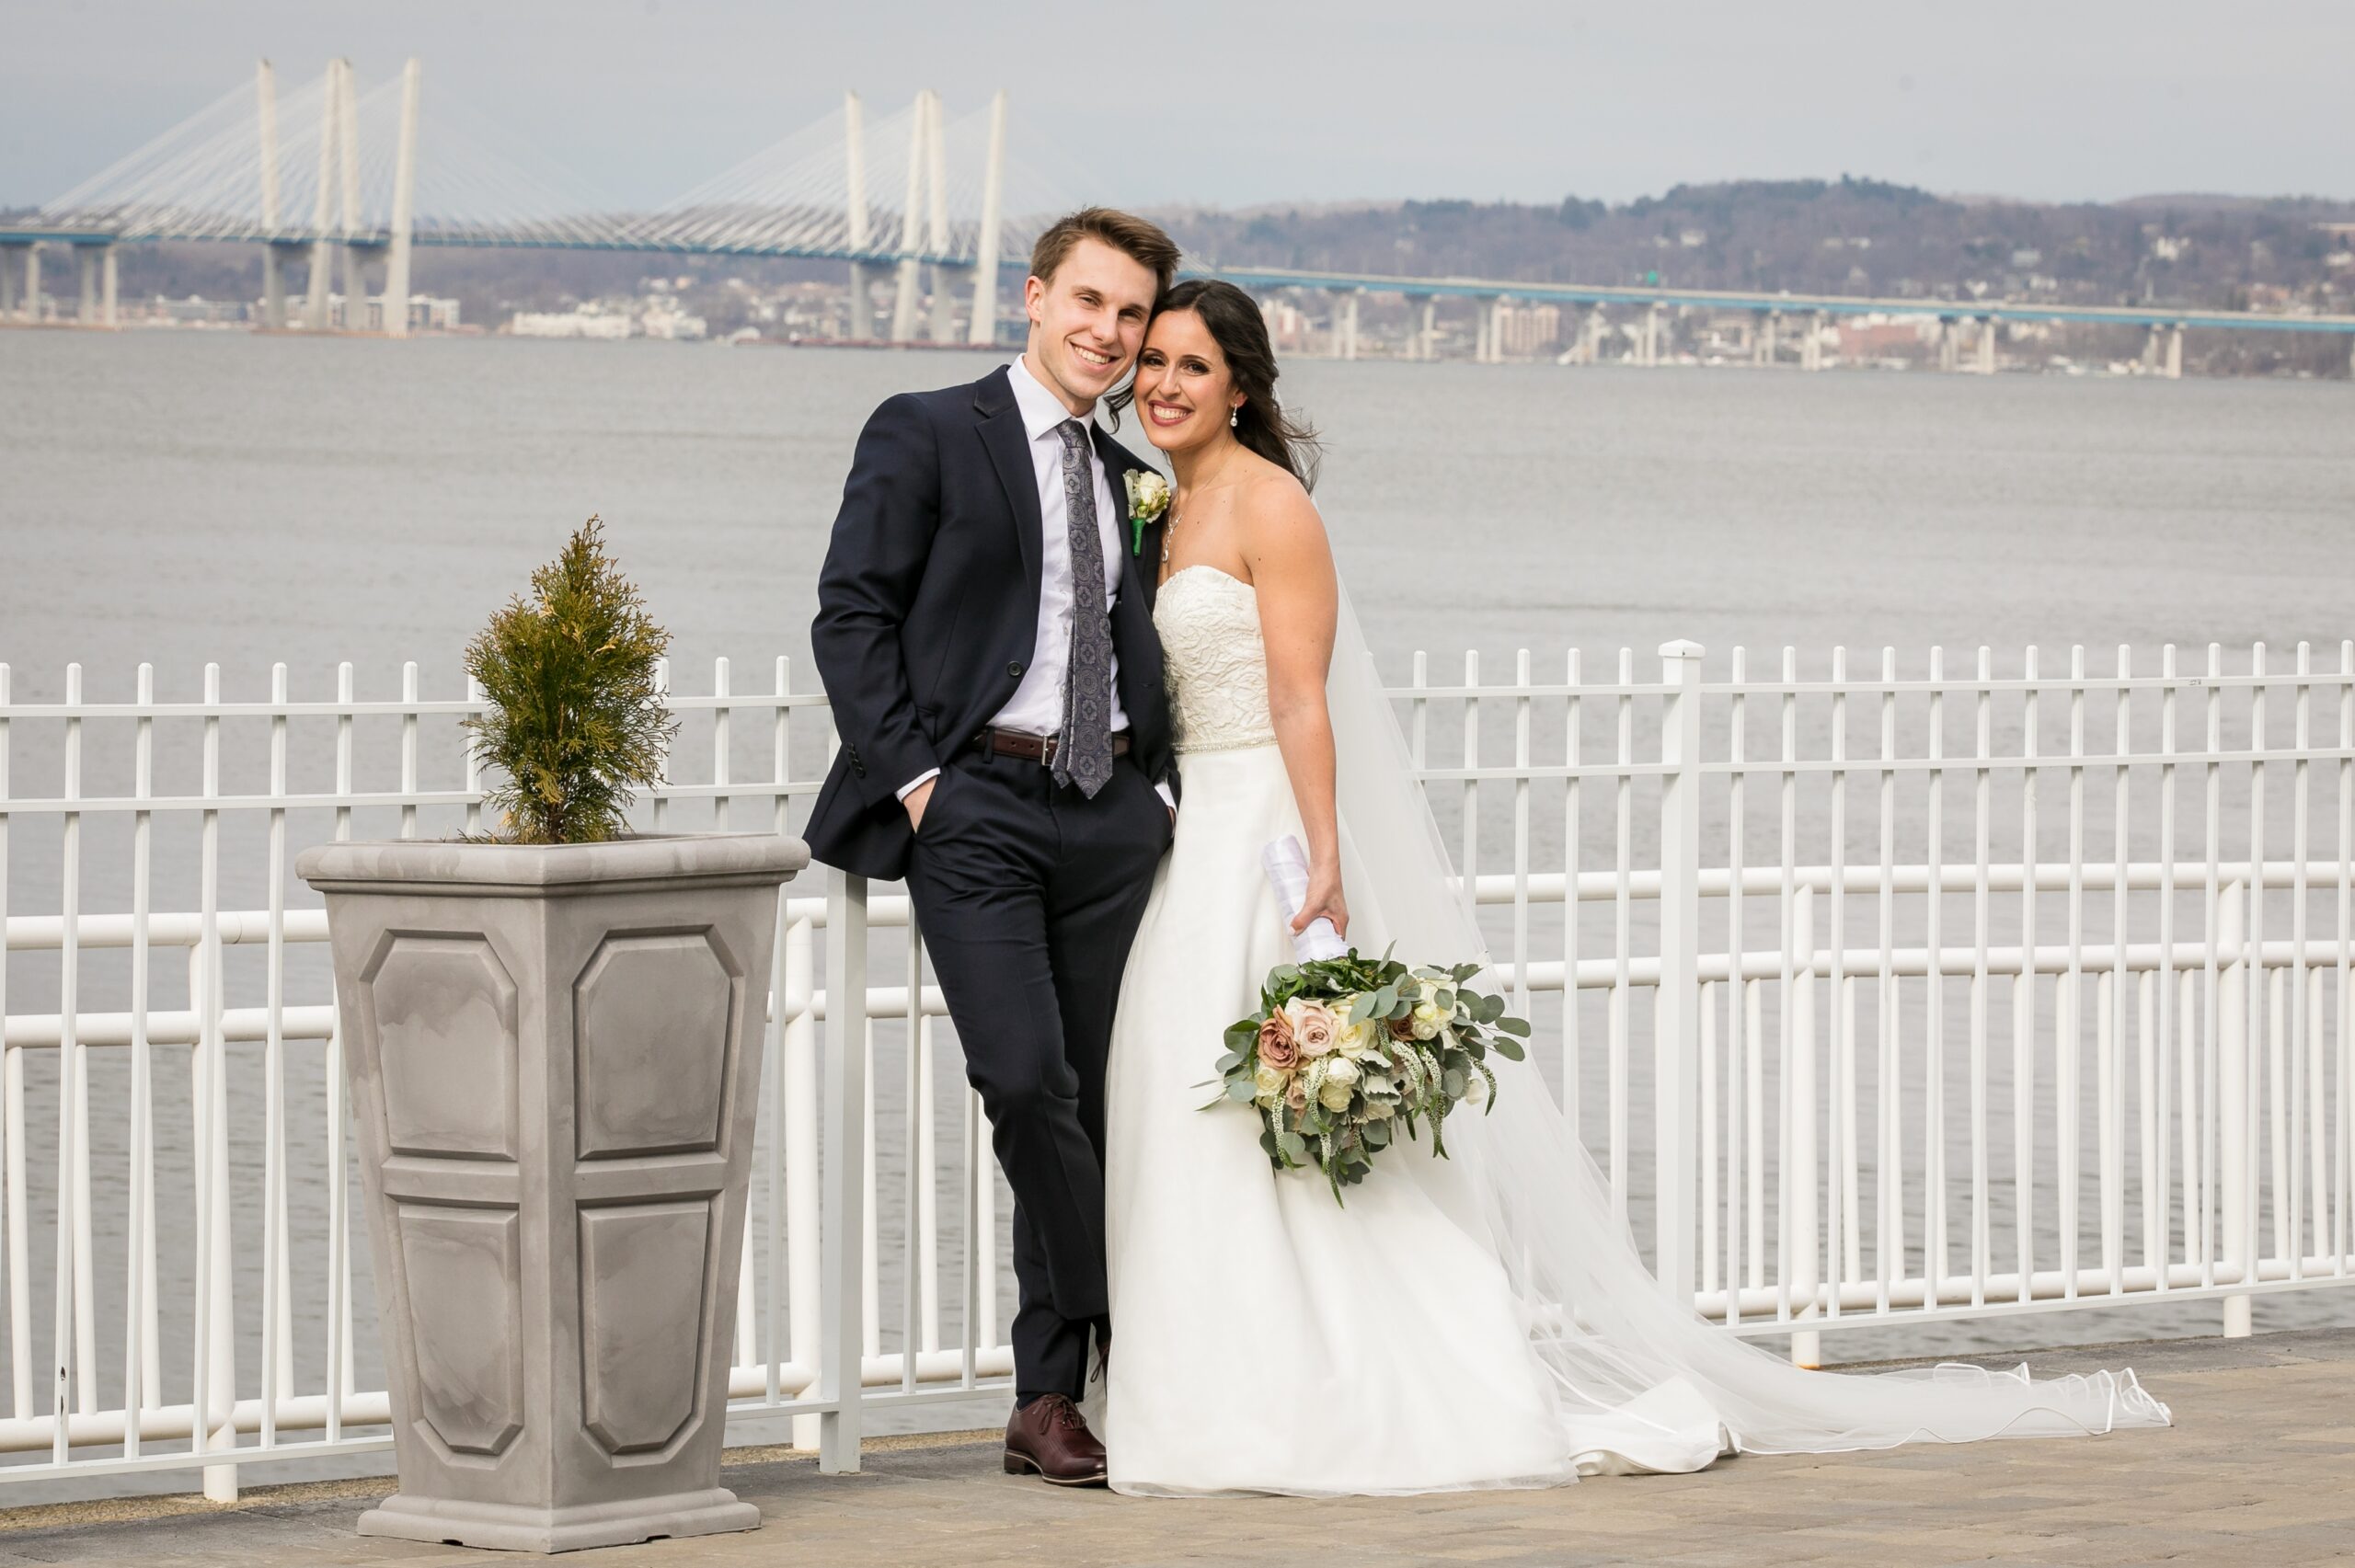 Bridal photos at waterfront wedding venue in NY